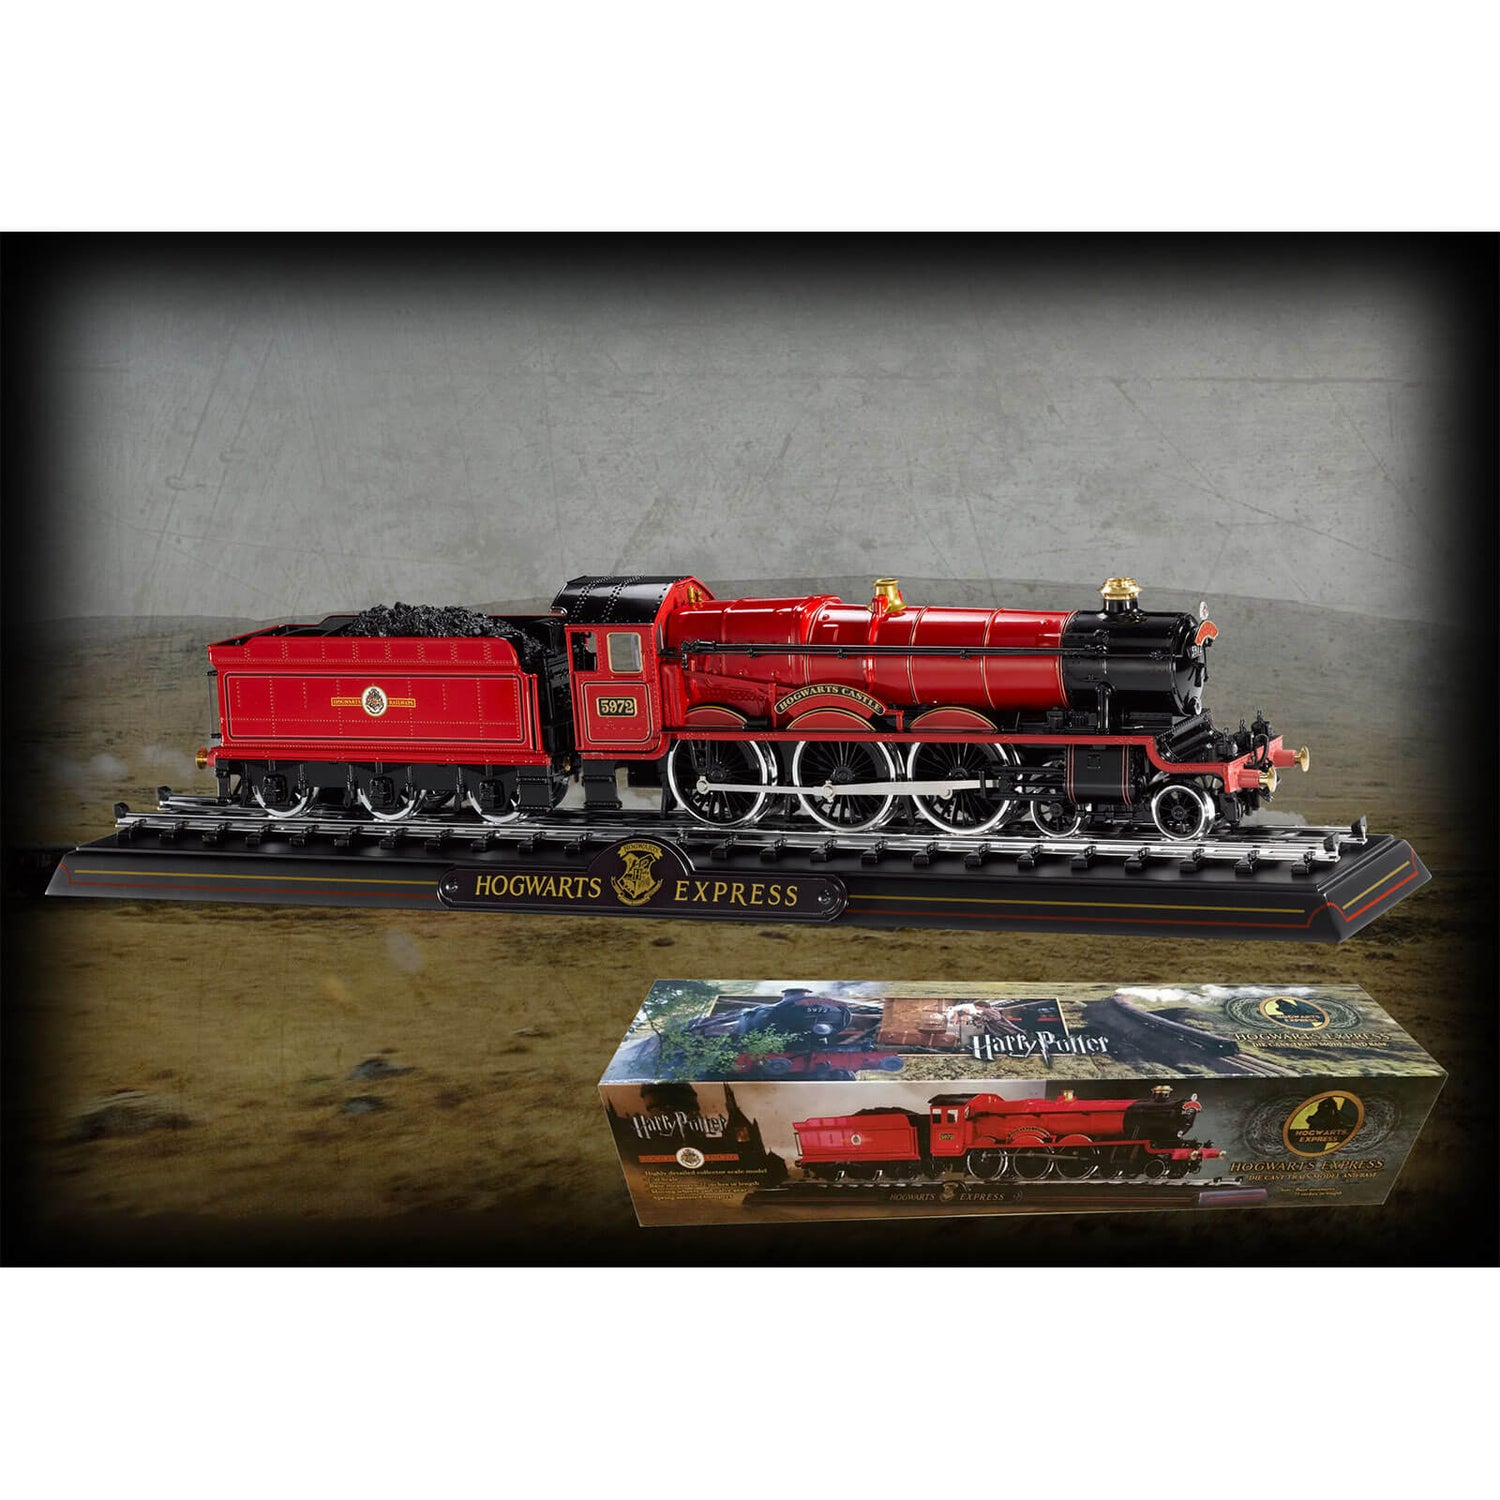 Harry Potter Hogwarts Express 1:50 Scale Model Train